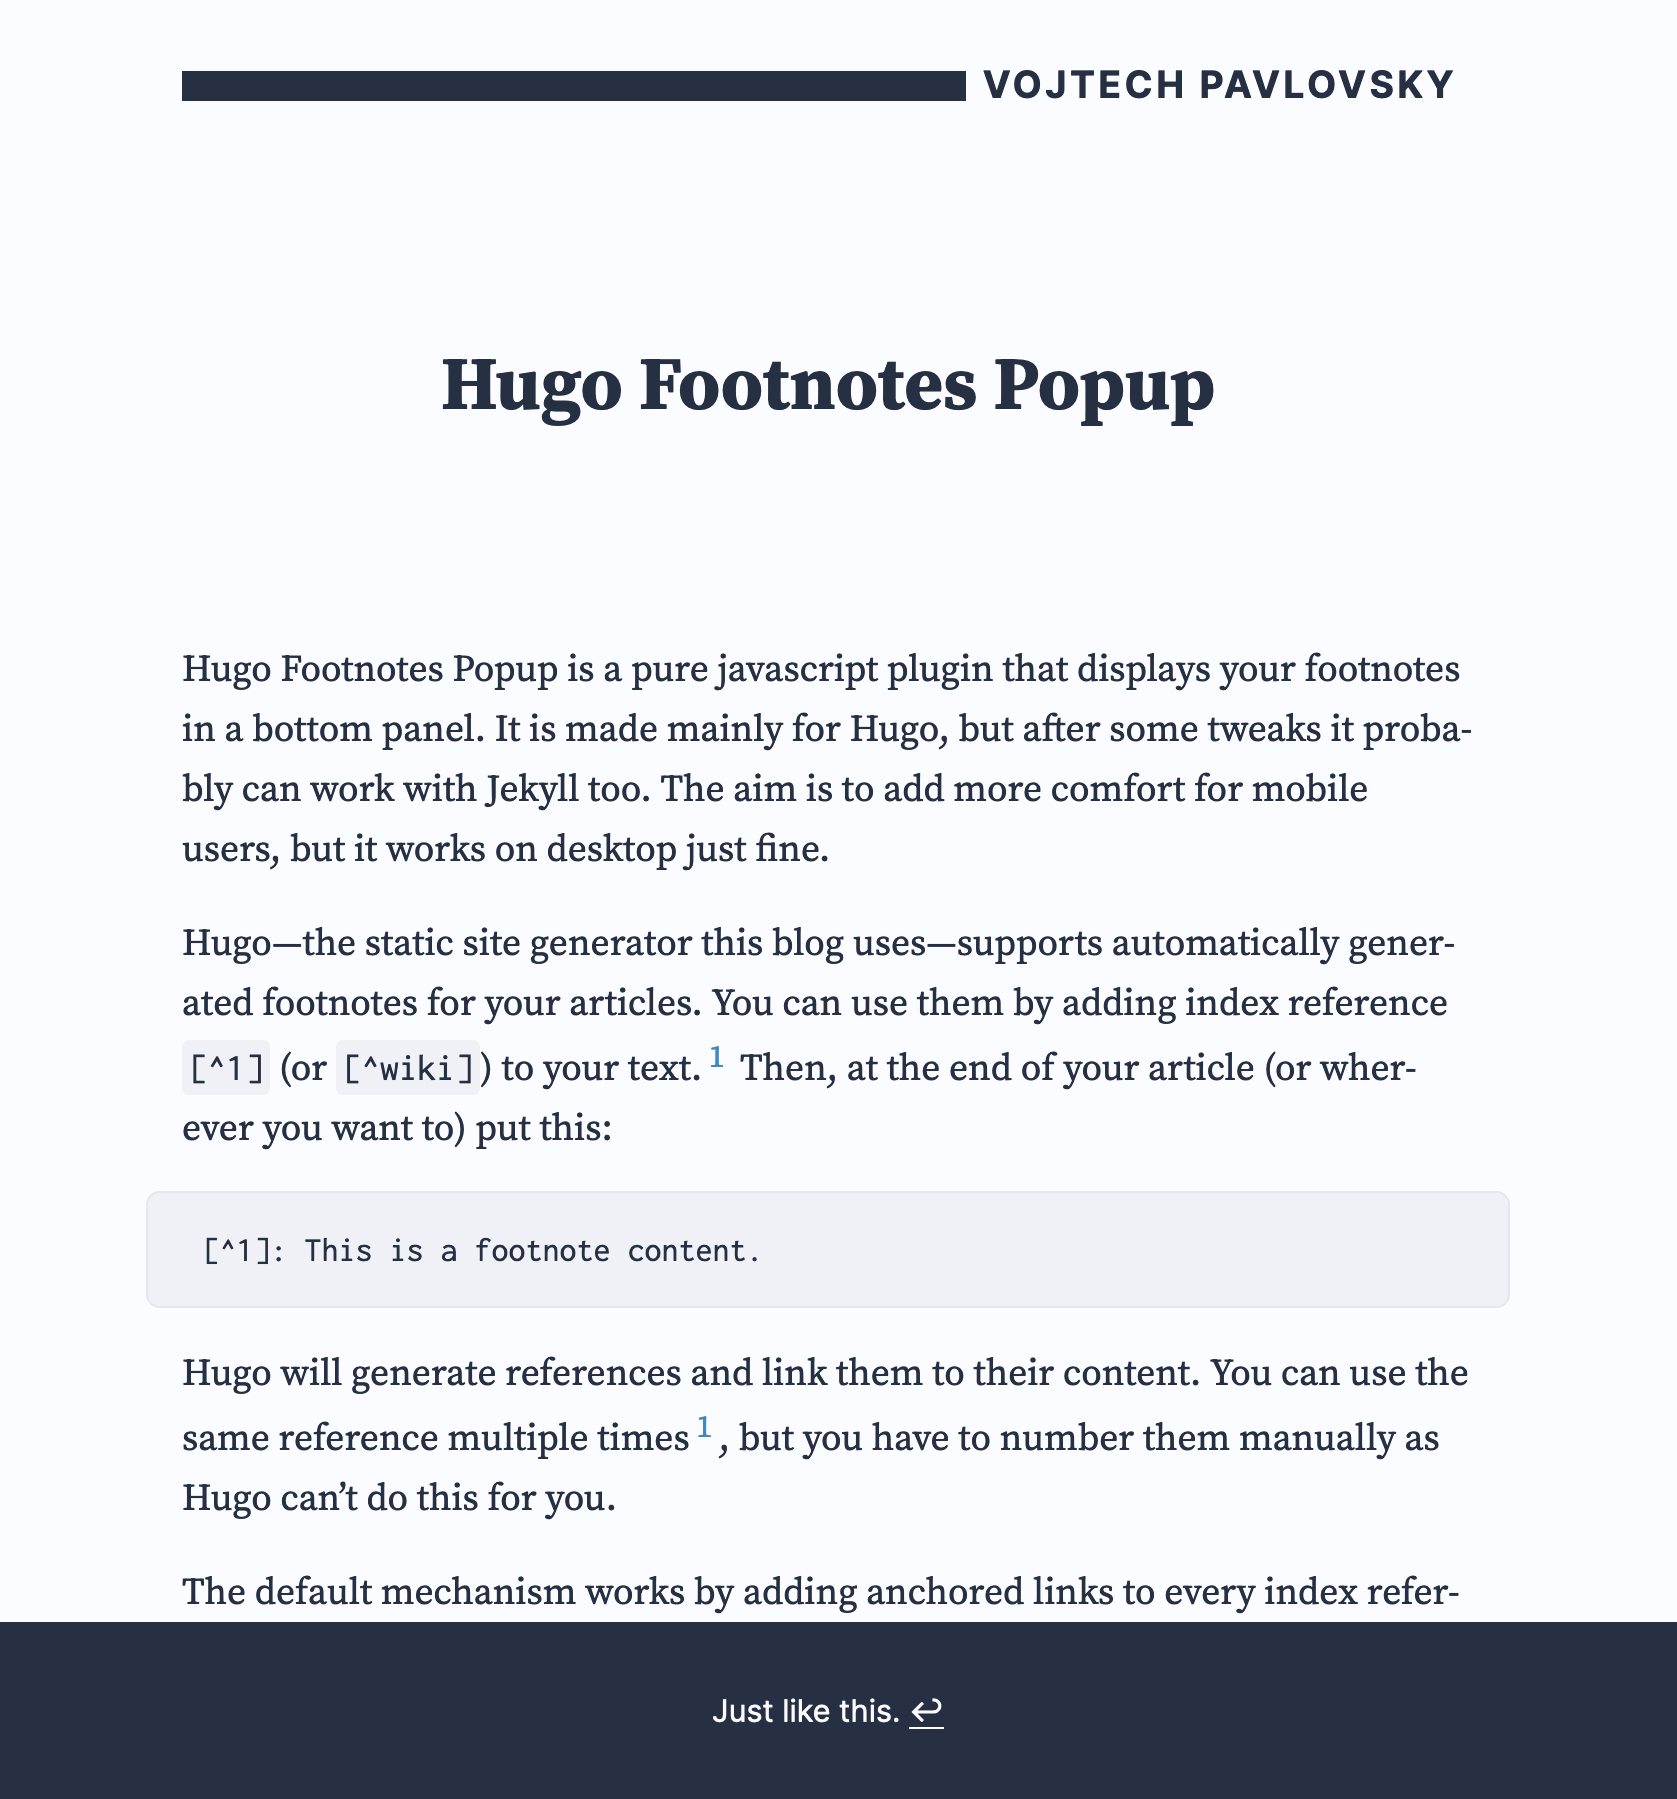 Hugo Footnotes Popup